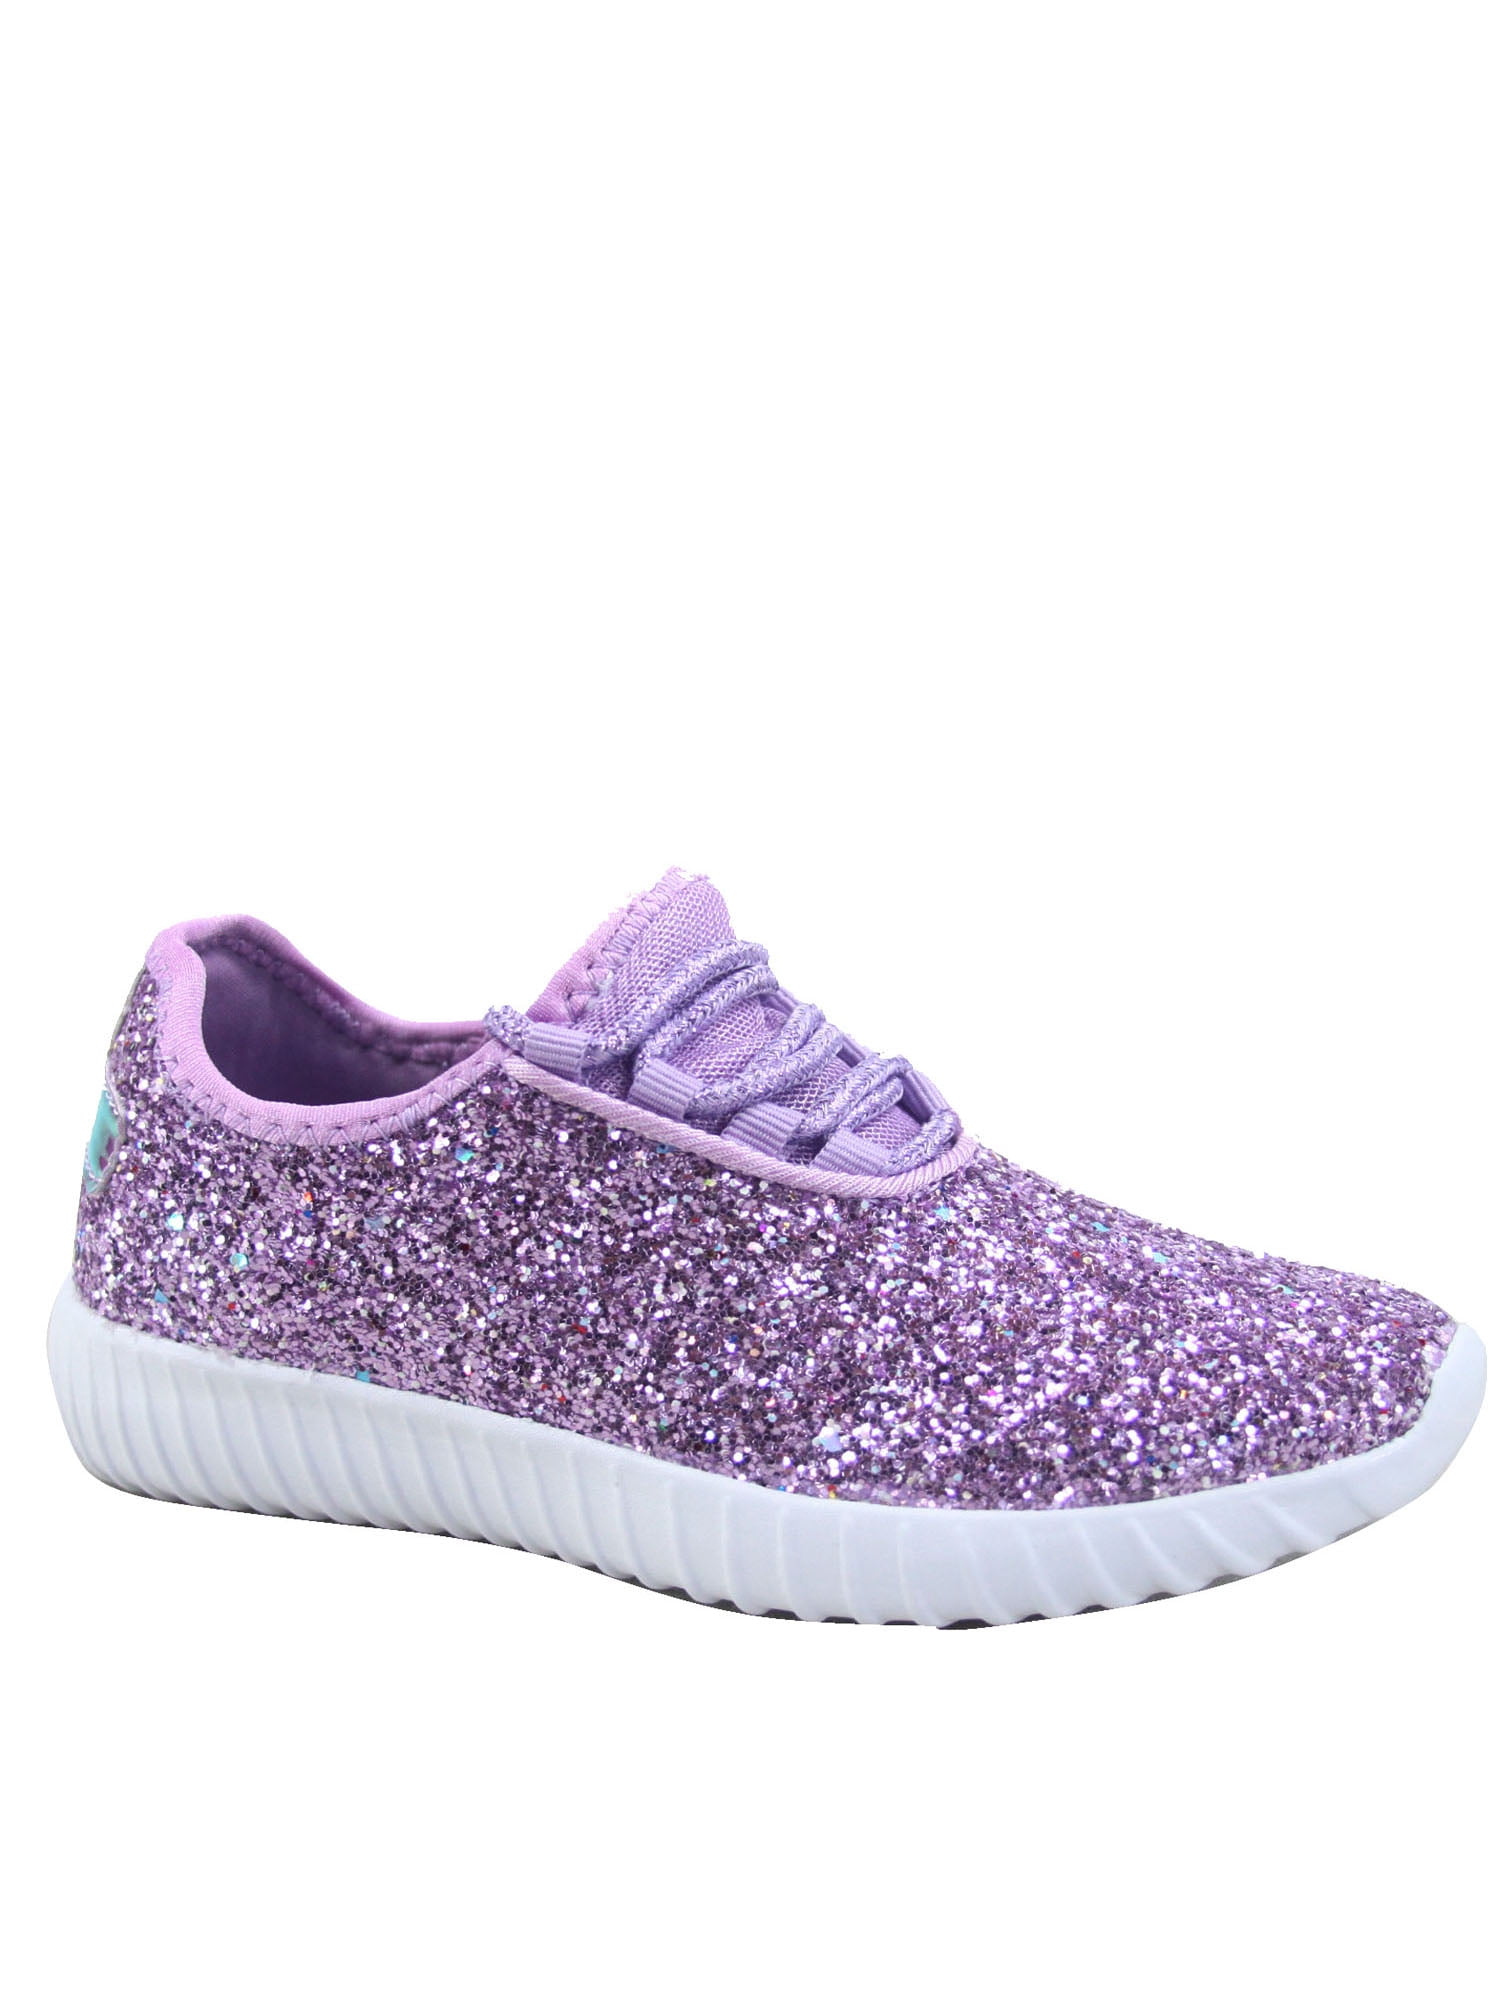 purple glitter tennis shoes